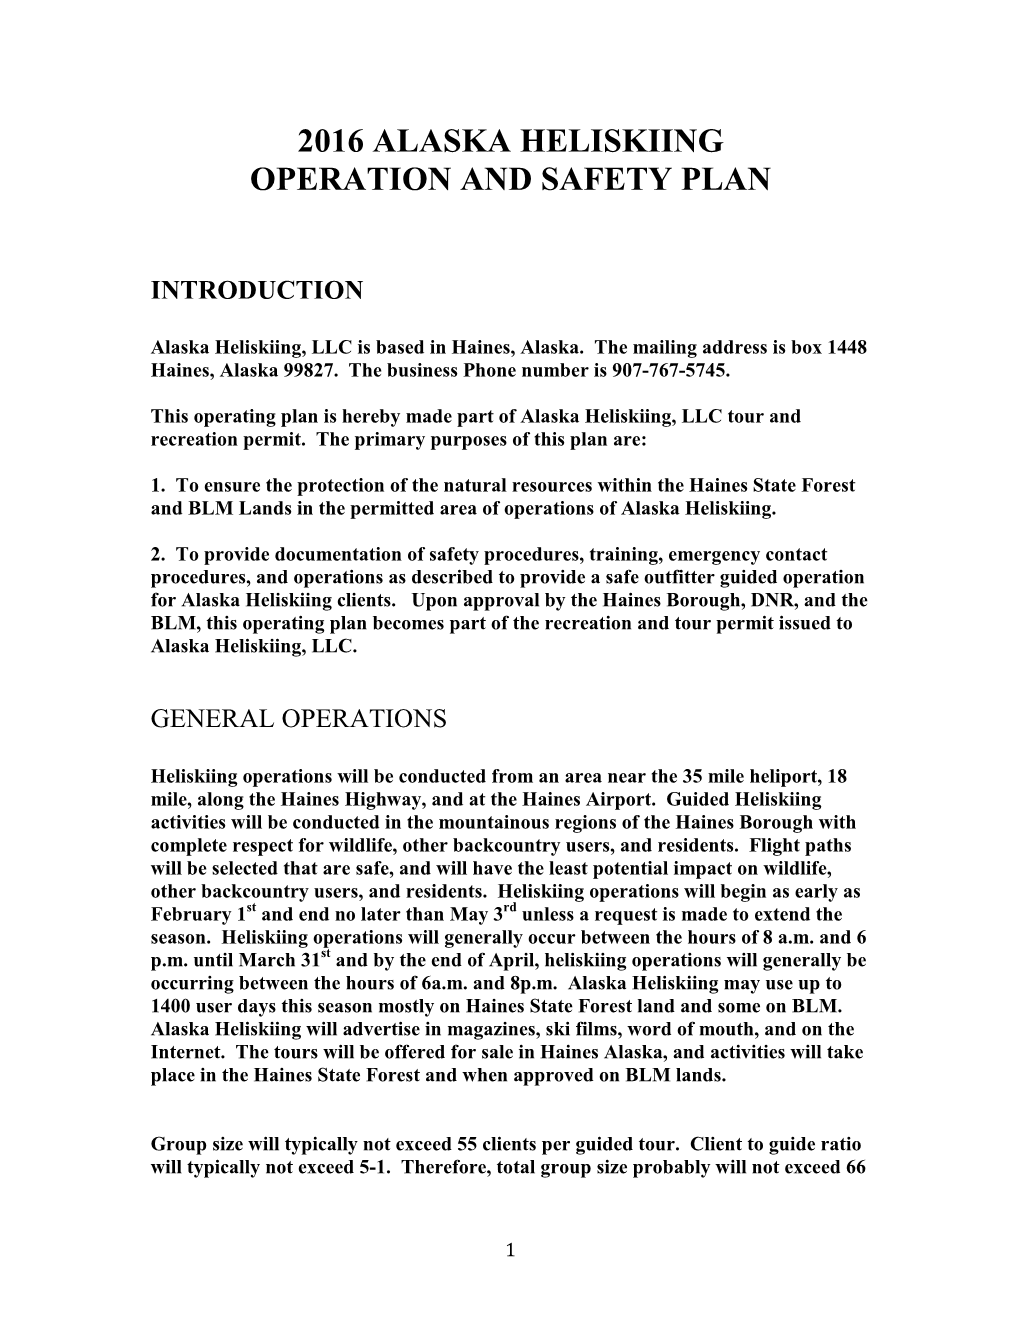 2016 Alaska Heliskiing Operation and Safety Plan